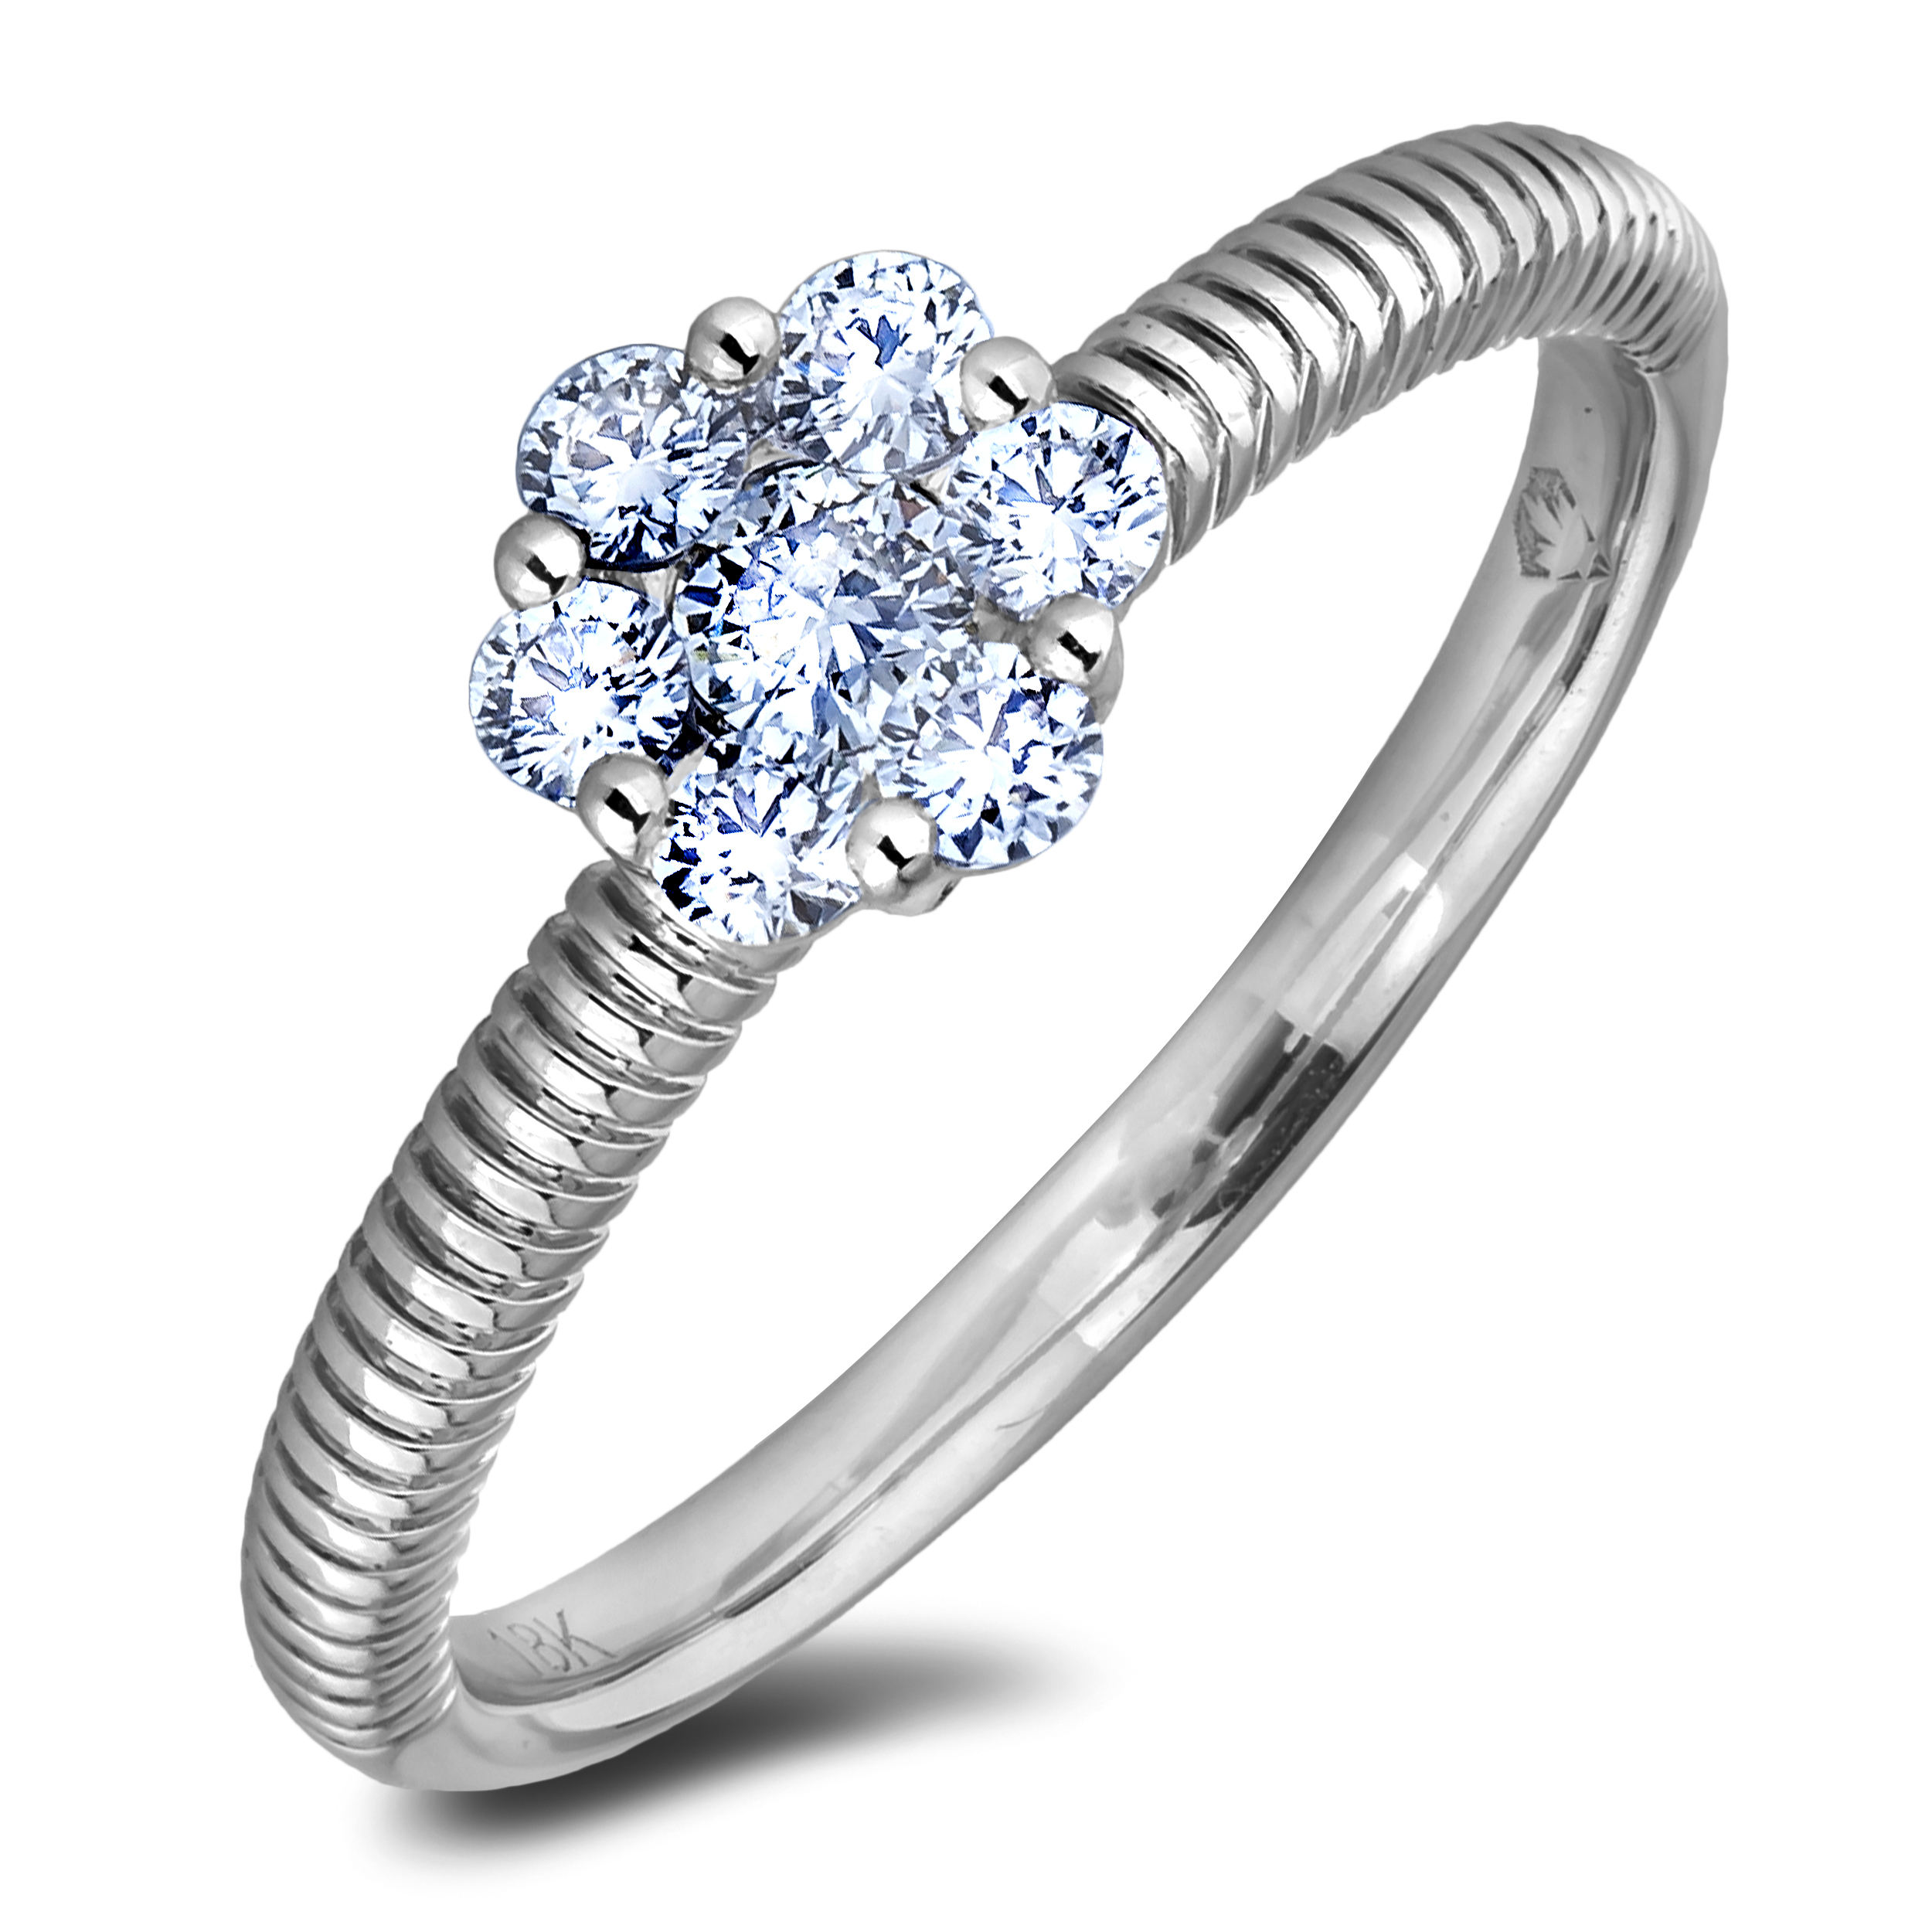 Diamond Engagement Halo Rings afr2384100 (Rings)